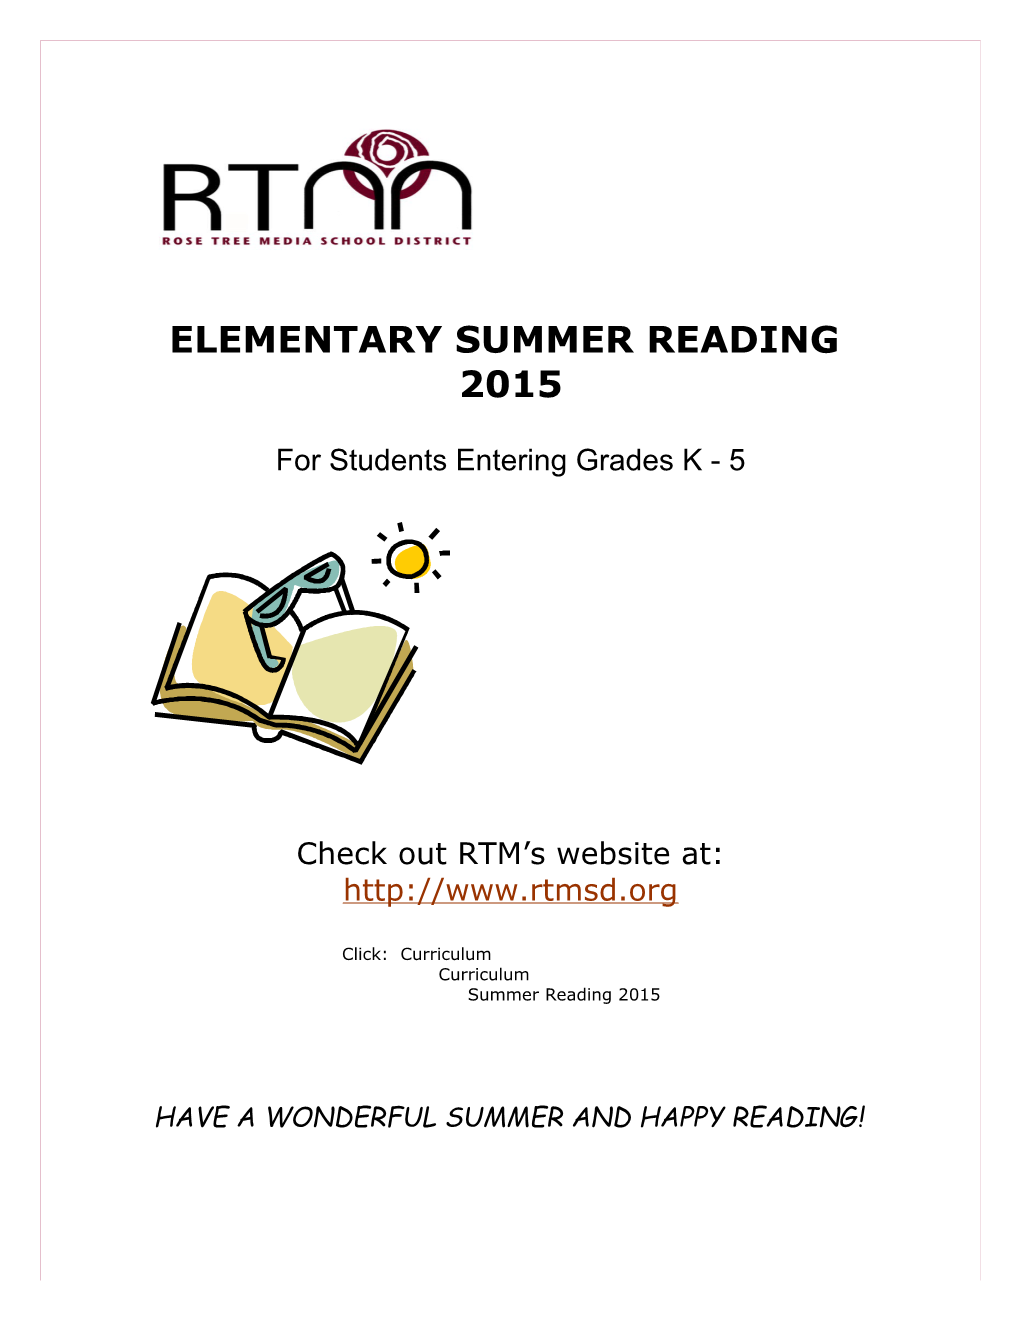 Elementary Summer Reading